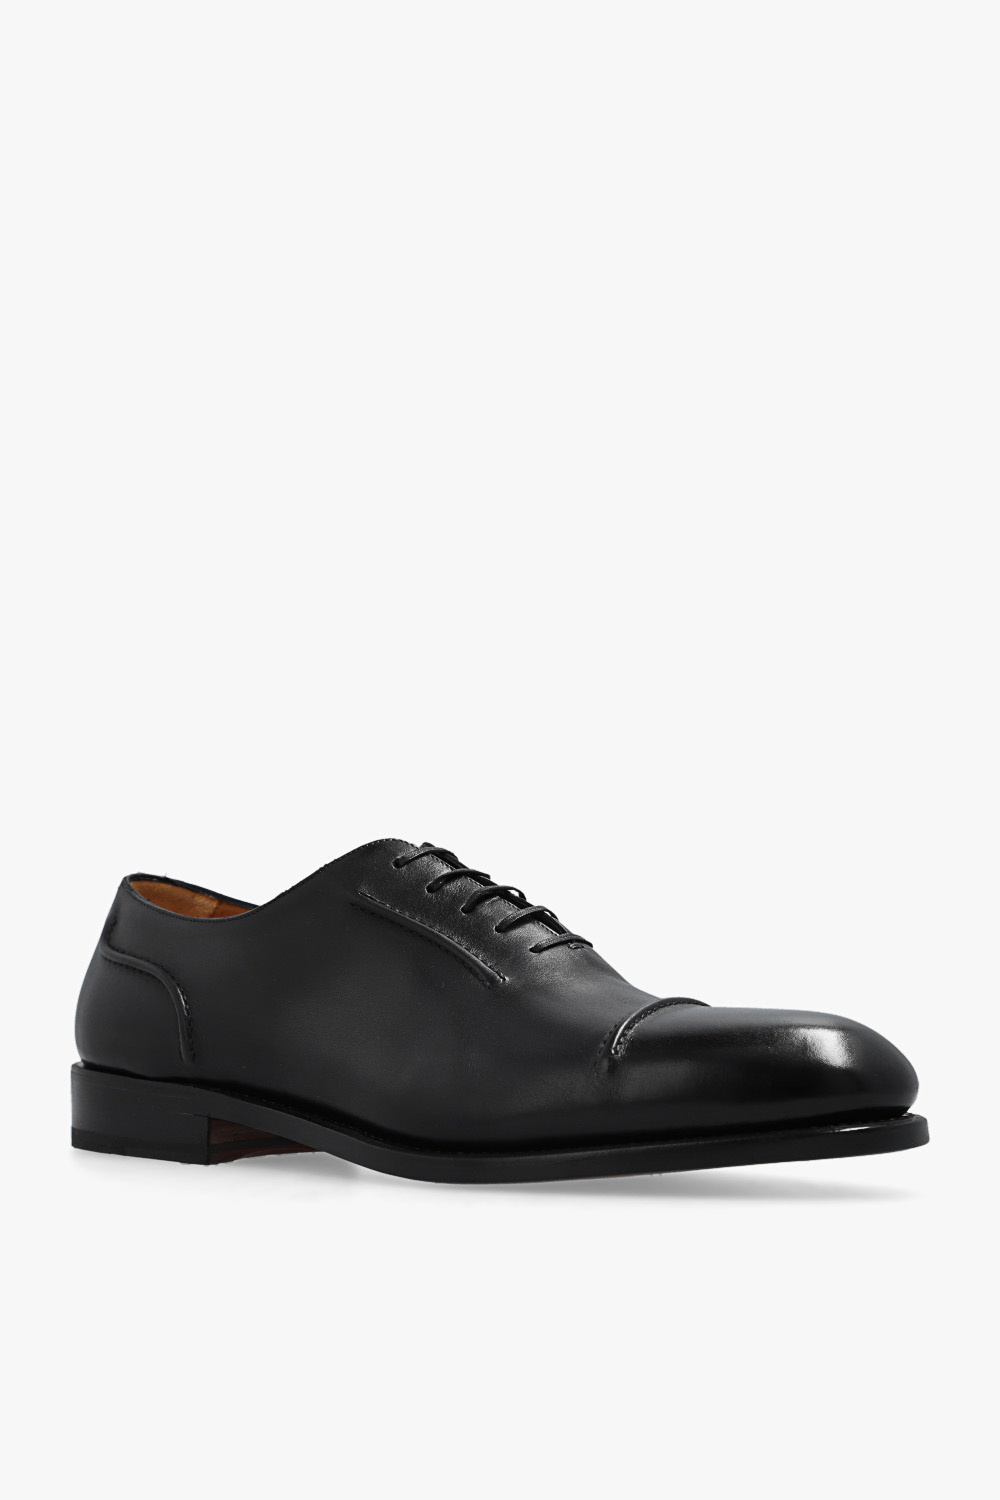 Salvatore Ferragamo ‘Giave’ leather shoes